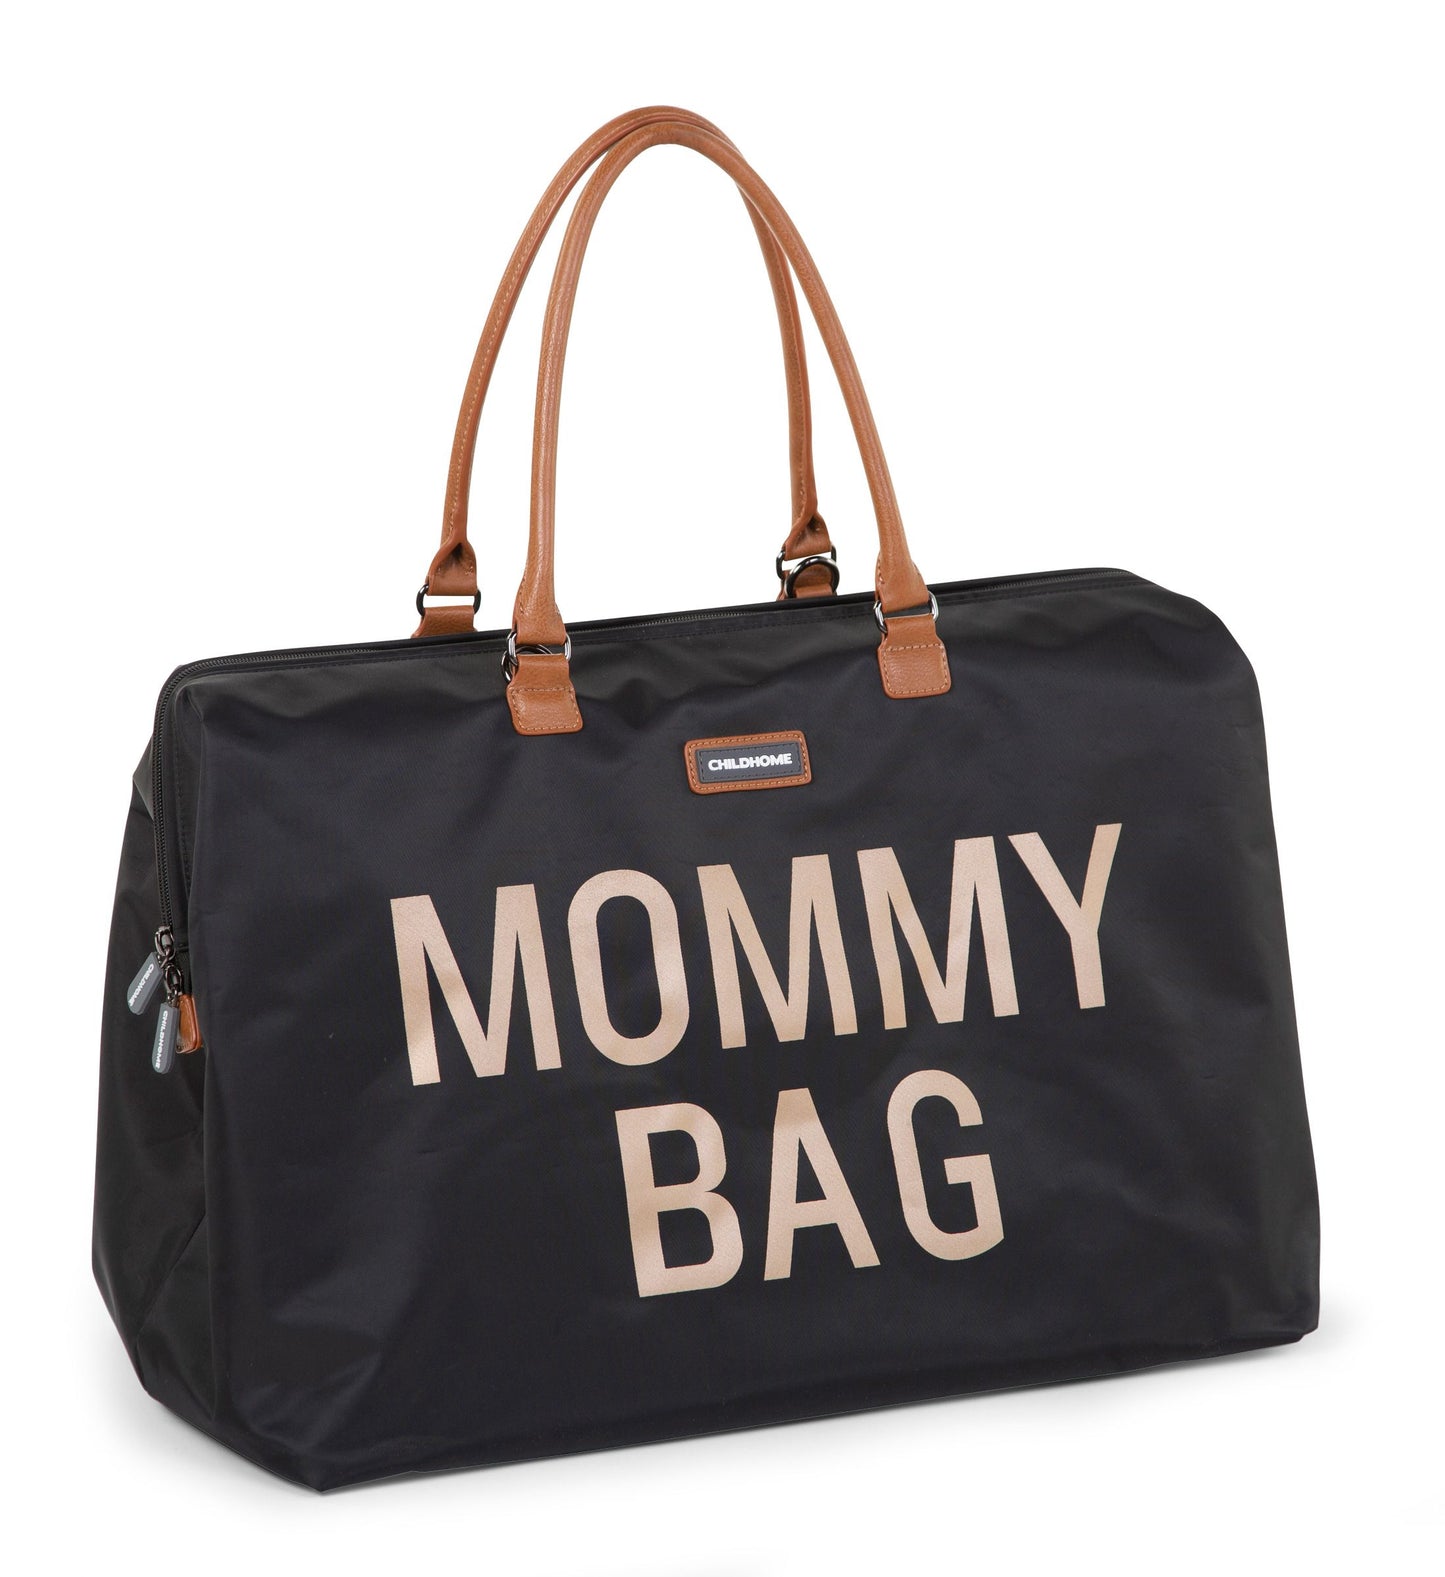 Mommy bag Nursery bag - Black gold